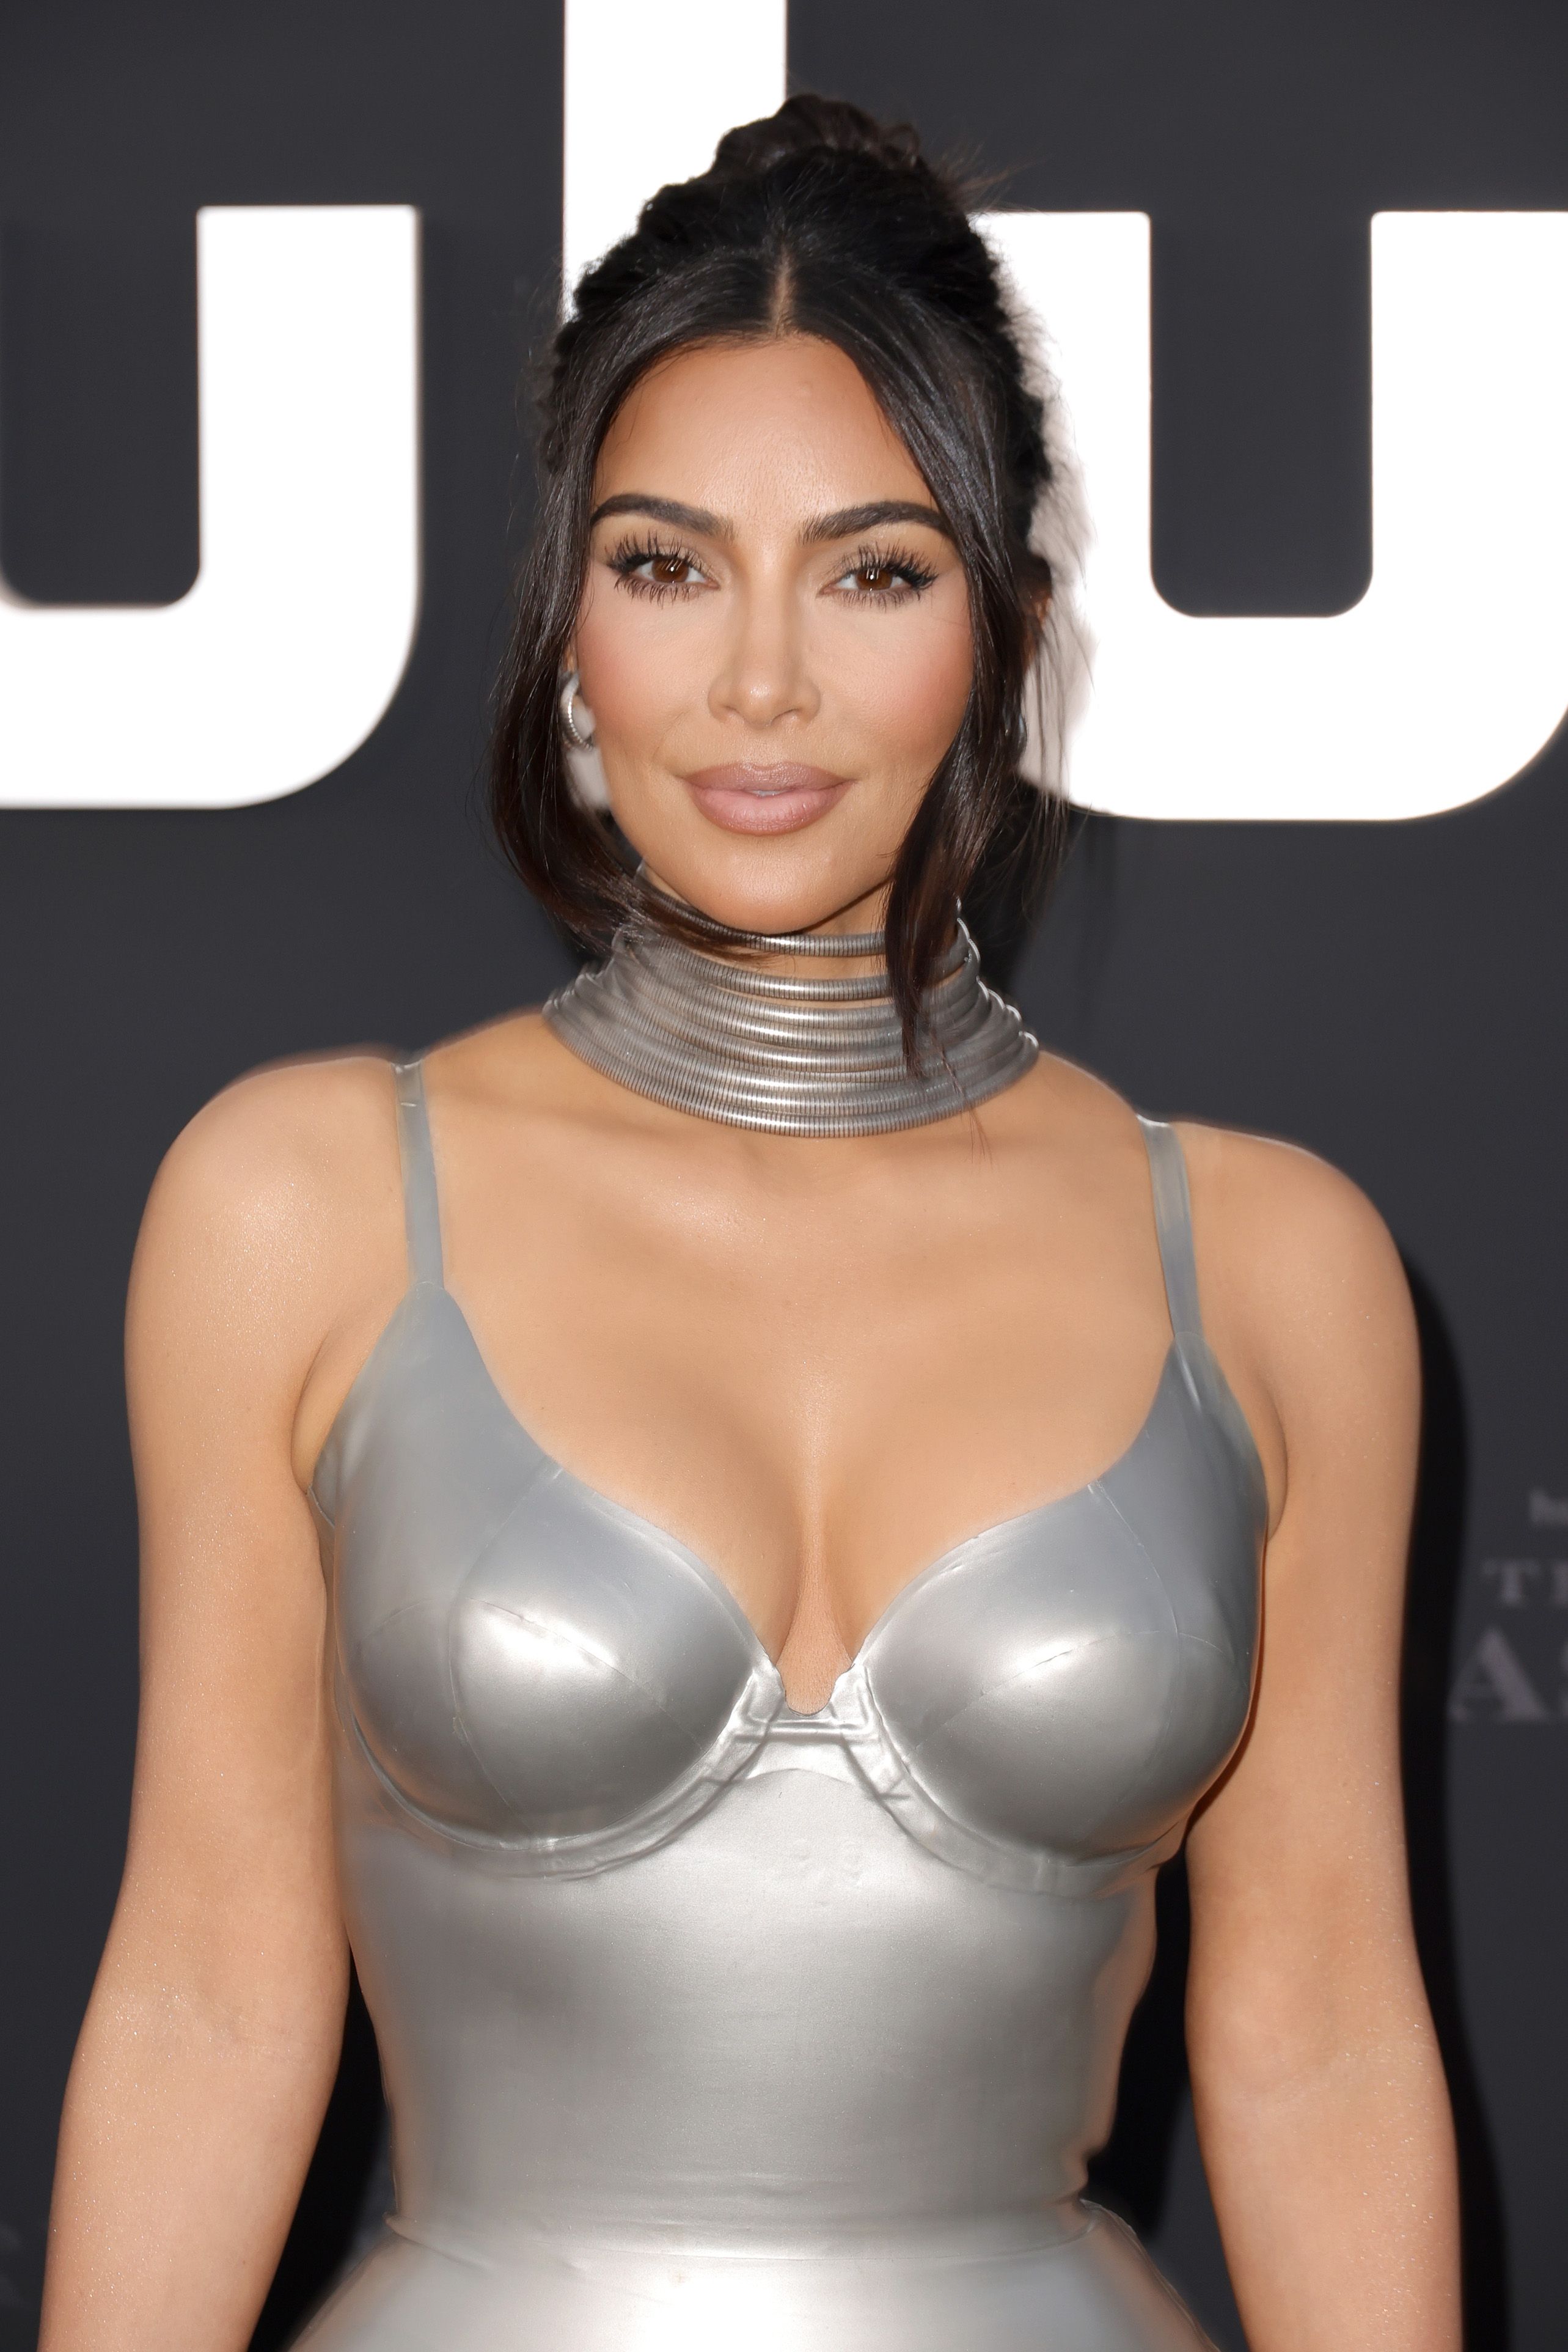 Kim Kardashian West News & Photos: Latest On Husband Kanye & Children -  HELLO!